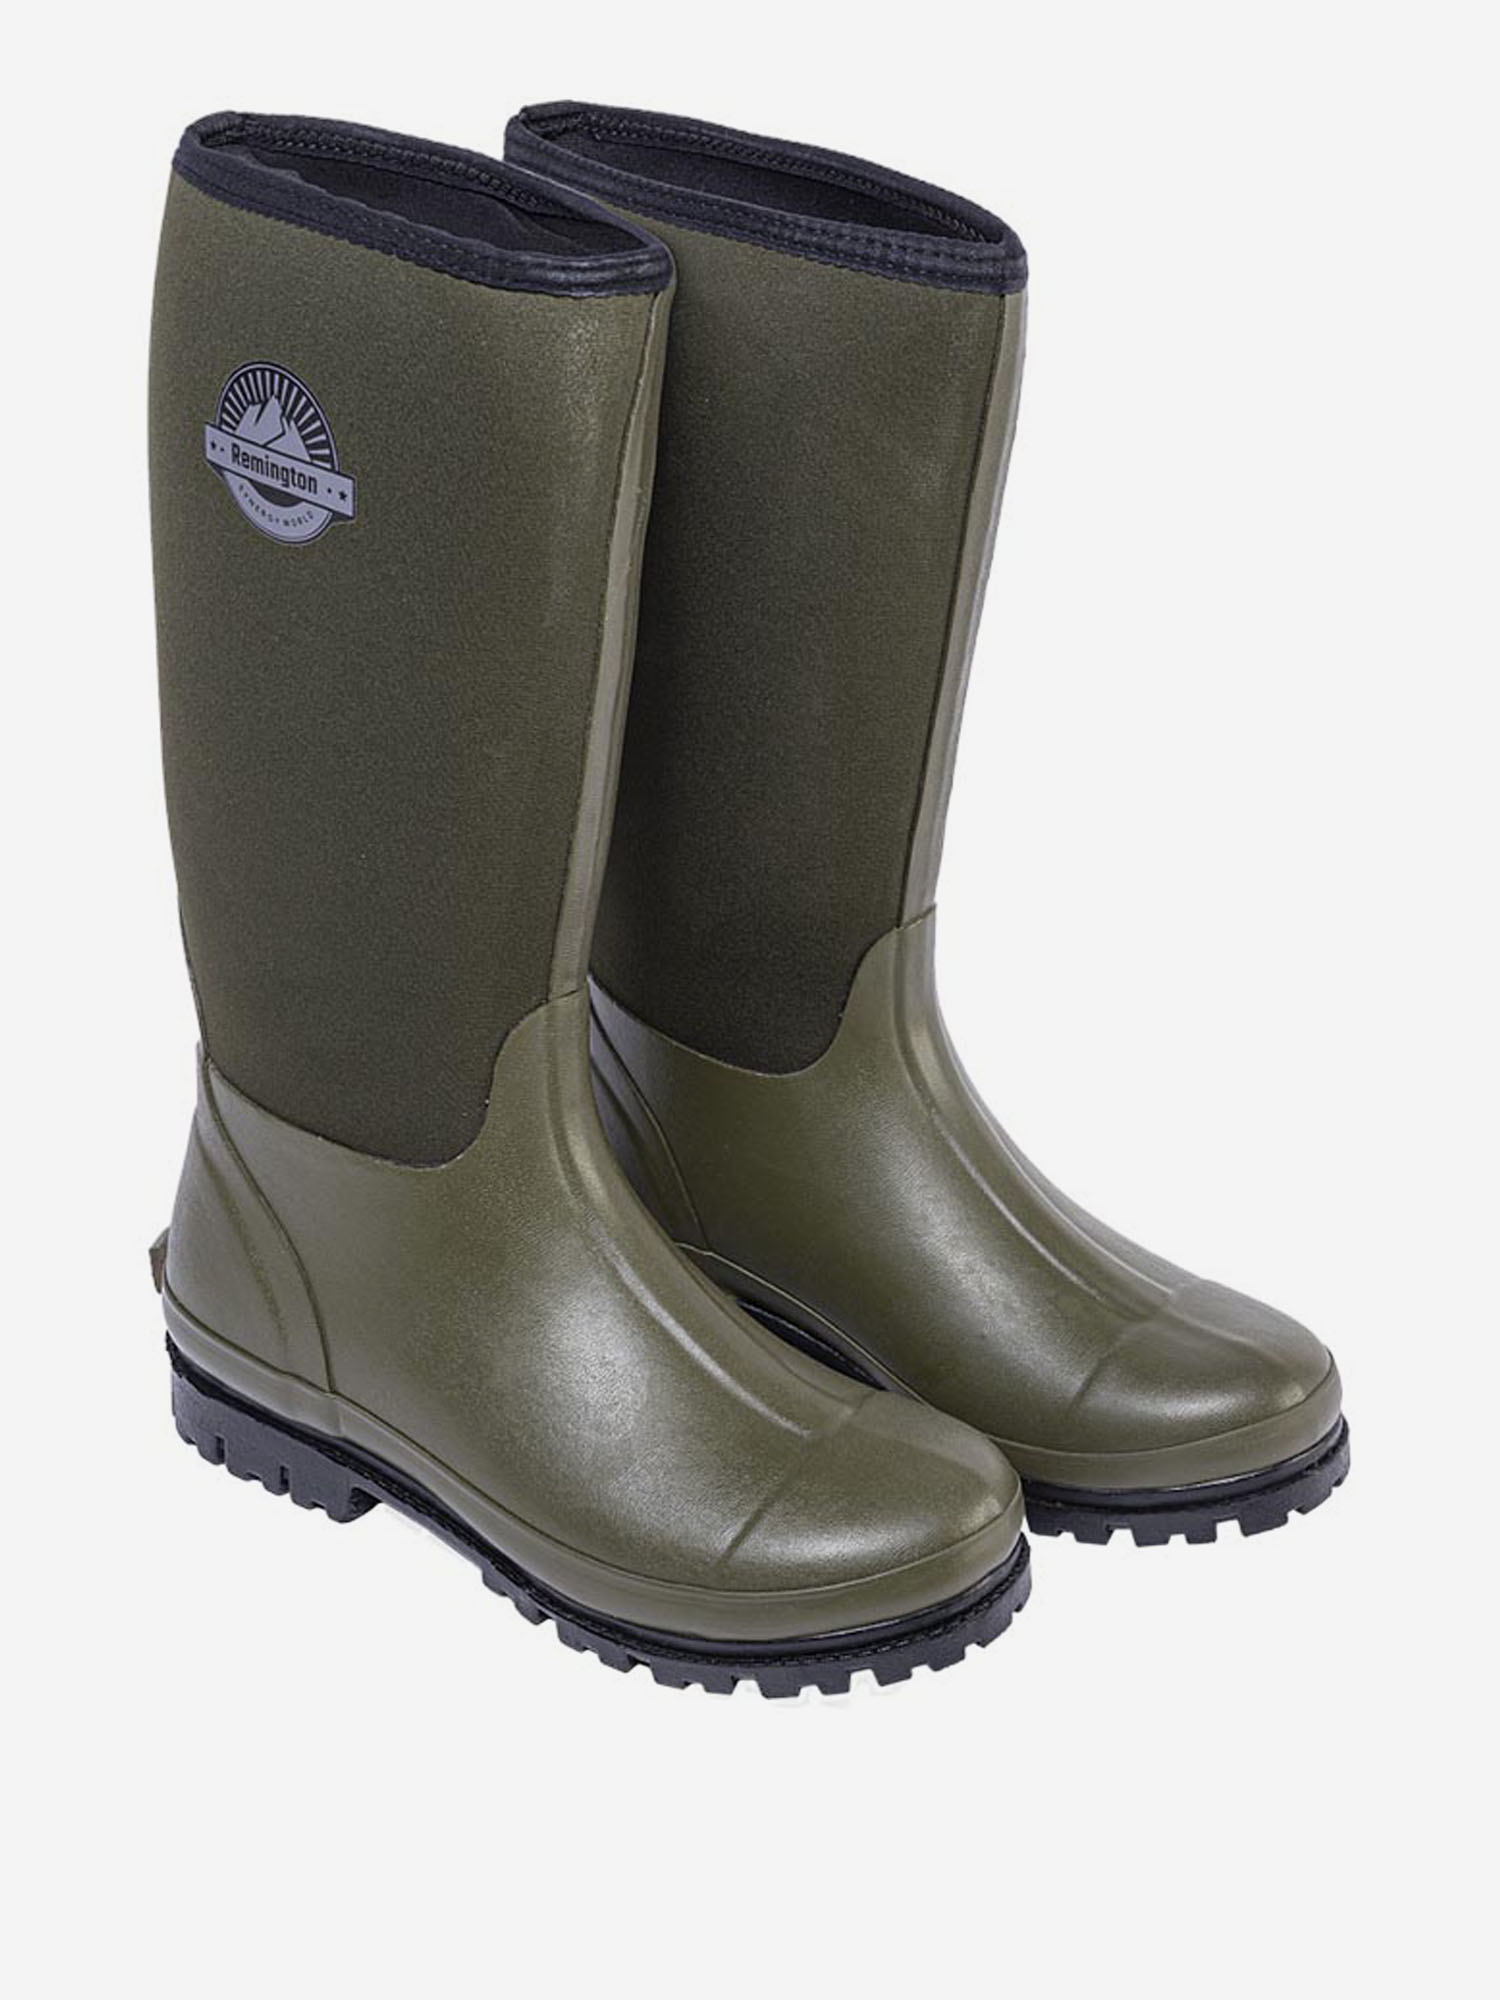 Сапоги Remington Men Tall Rubber Boots, цвет: зеленый, Зеленый